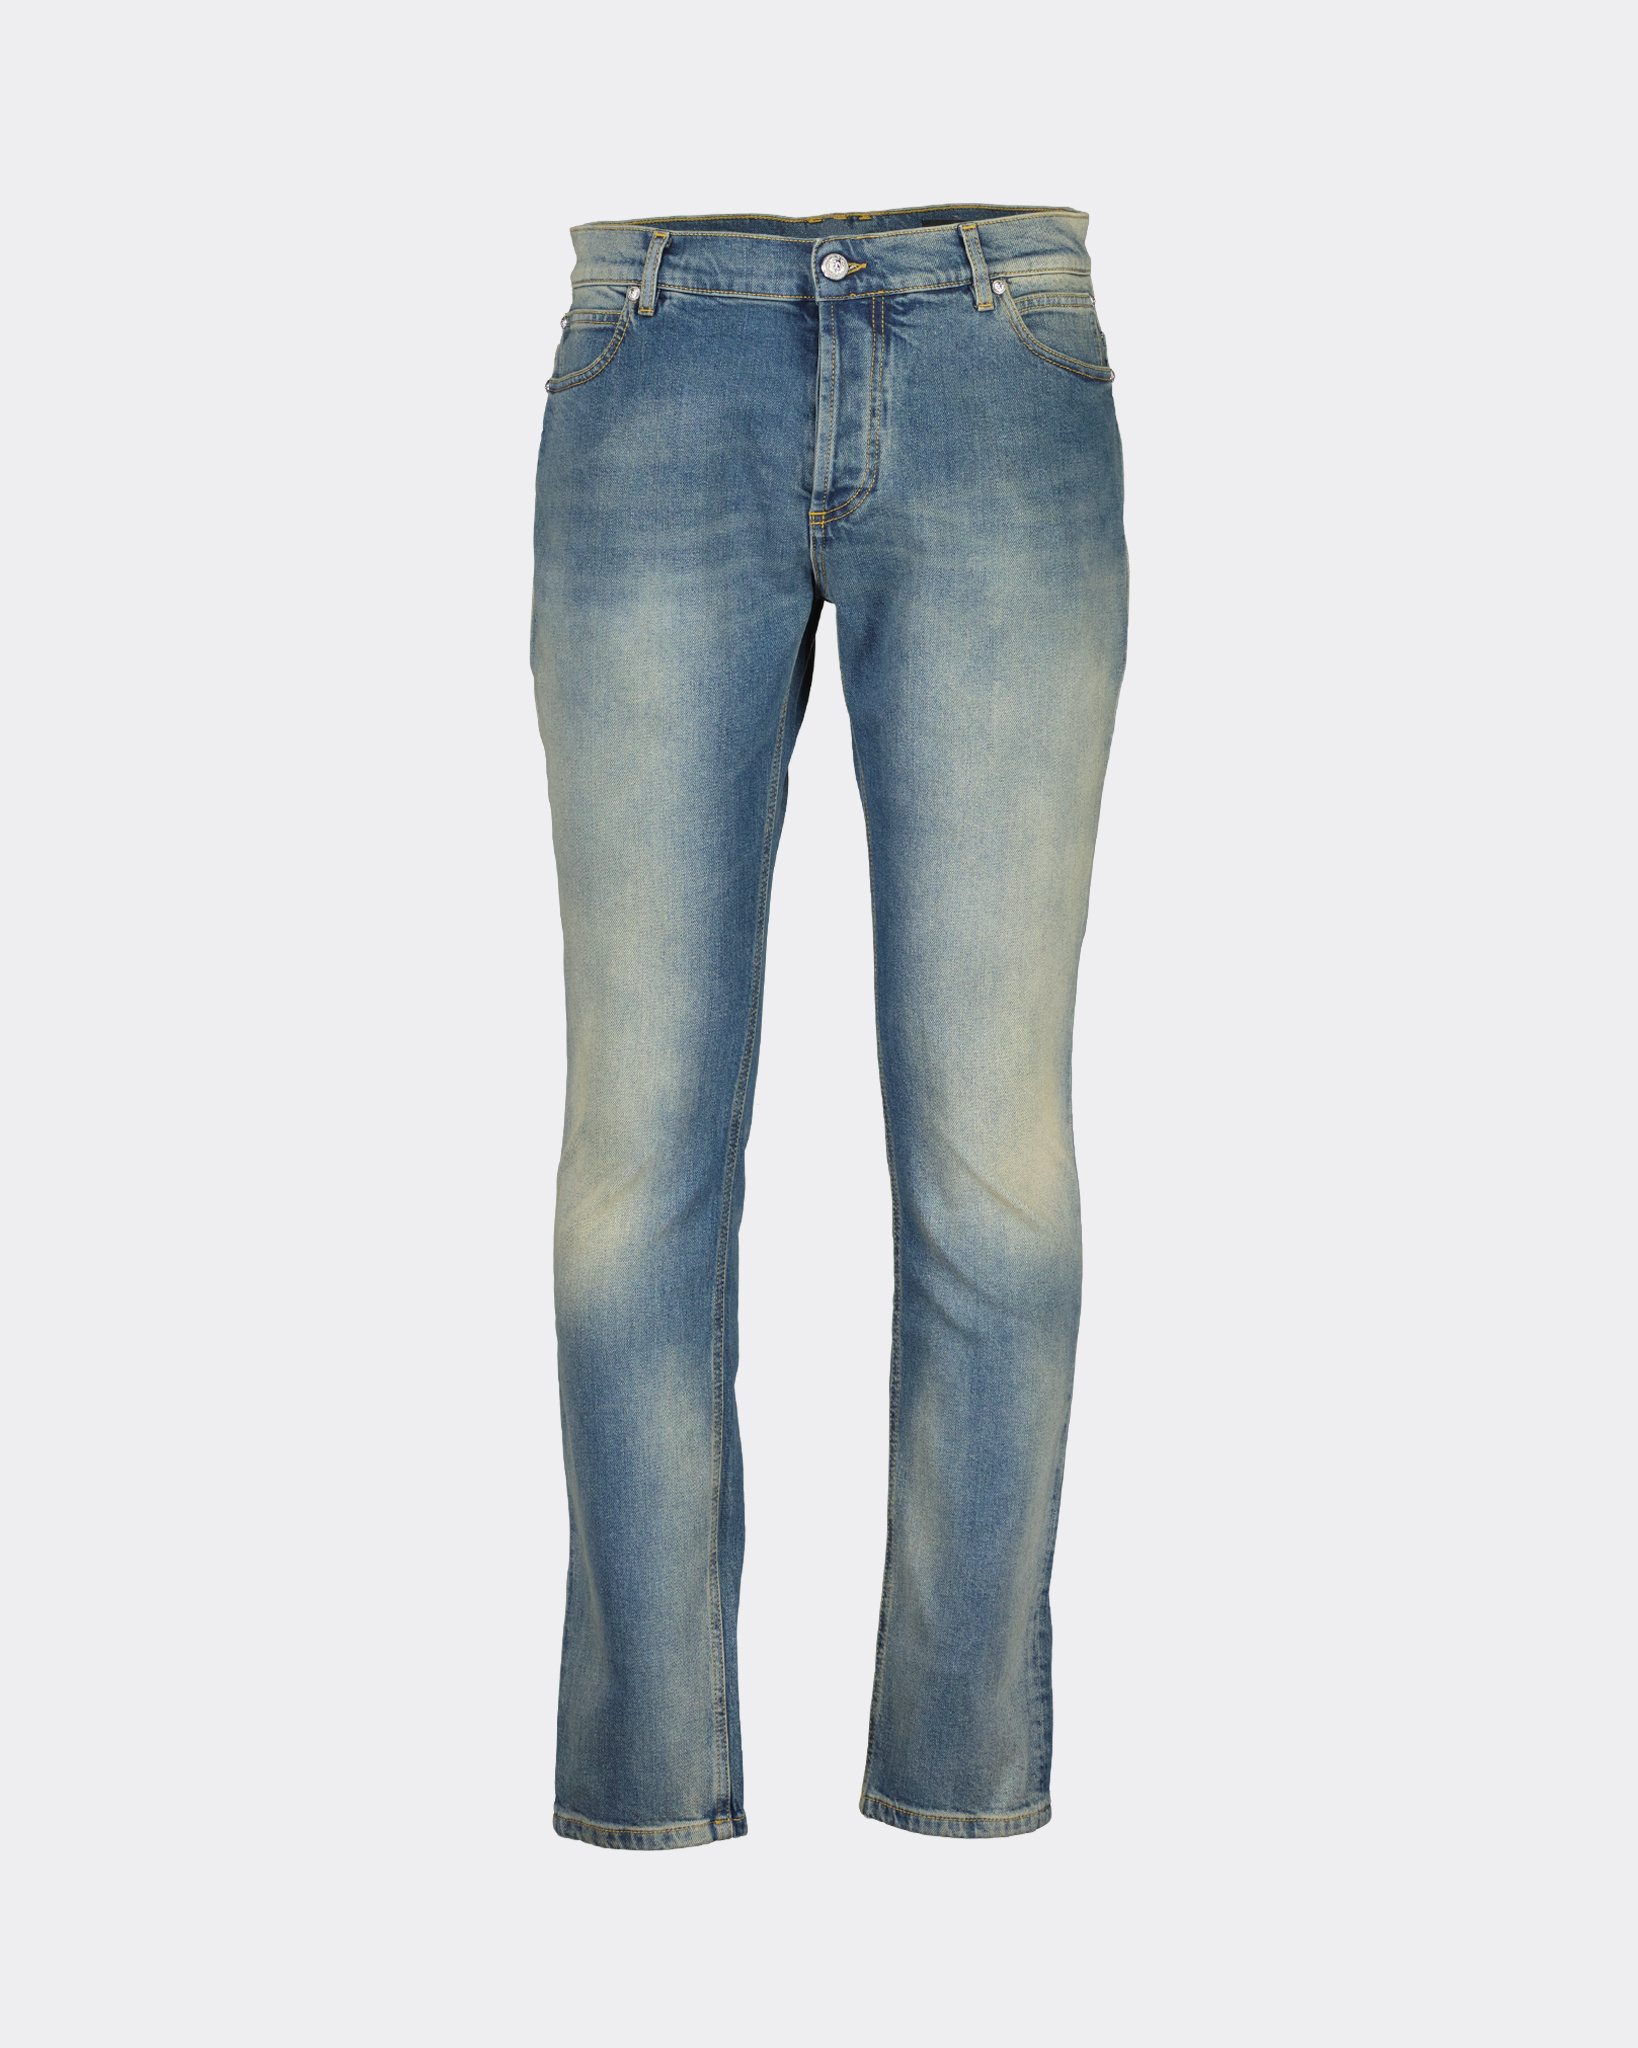 Vintage Boys Cotler Stone Washed Jeans Size 8R | eBay